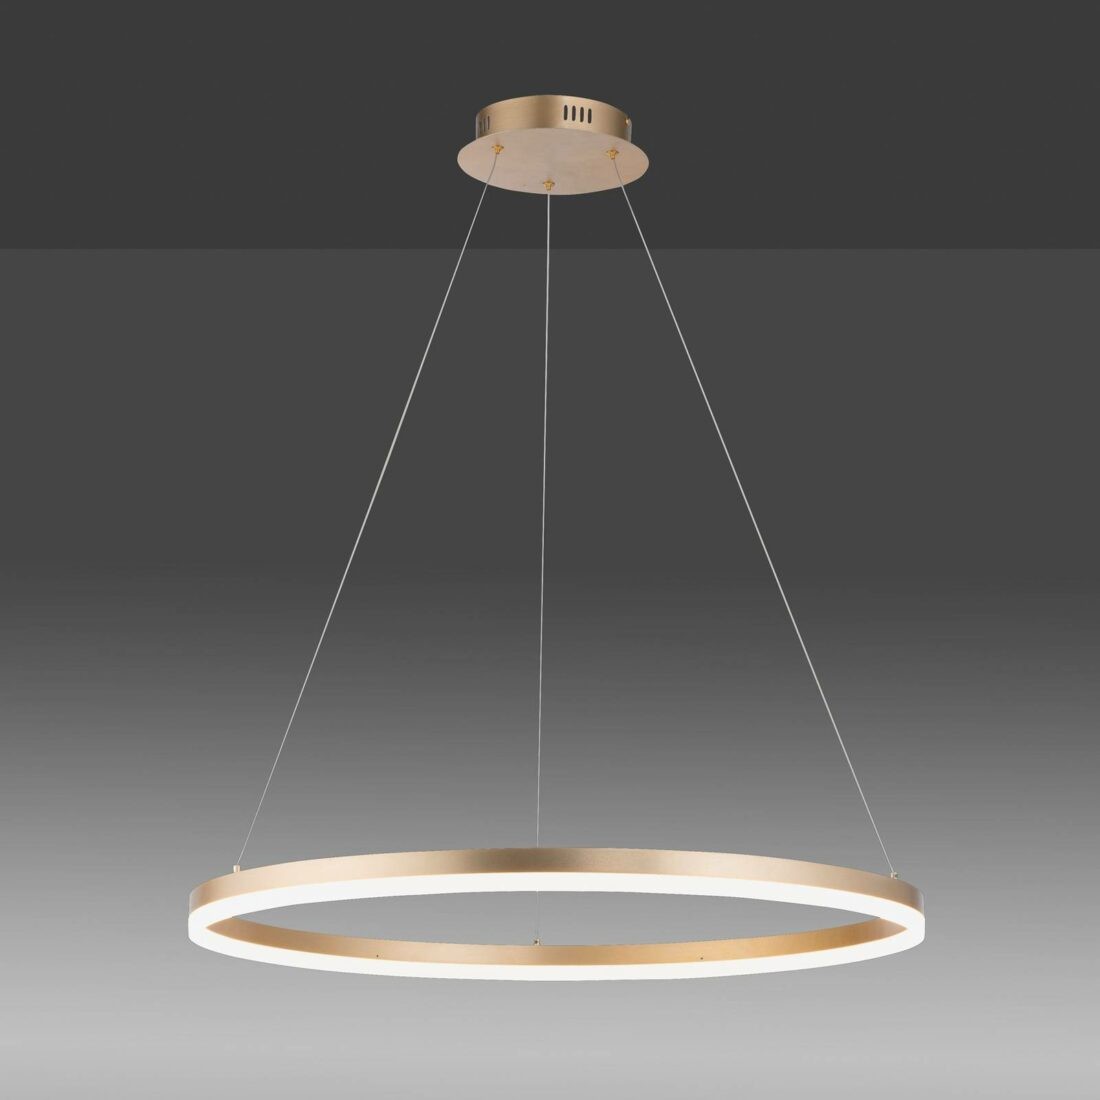 Paul Neuhaus LED závěsné světlo Titus kulaté Ø80cm